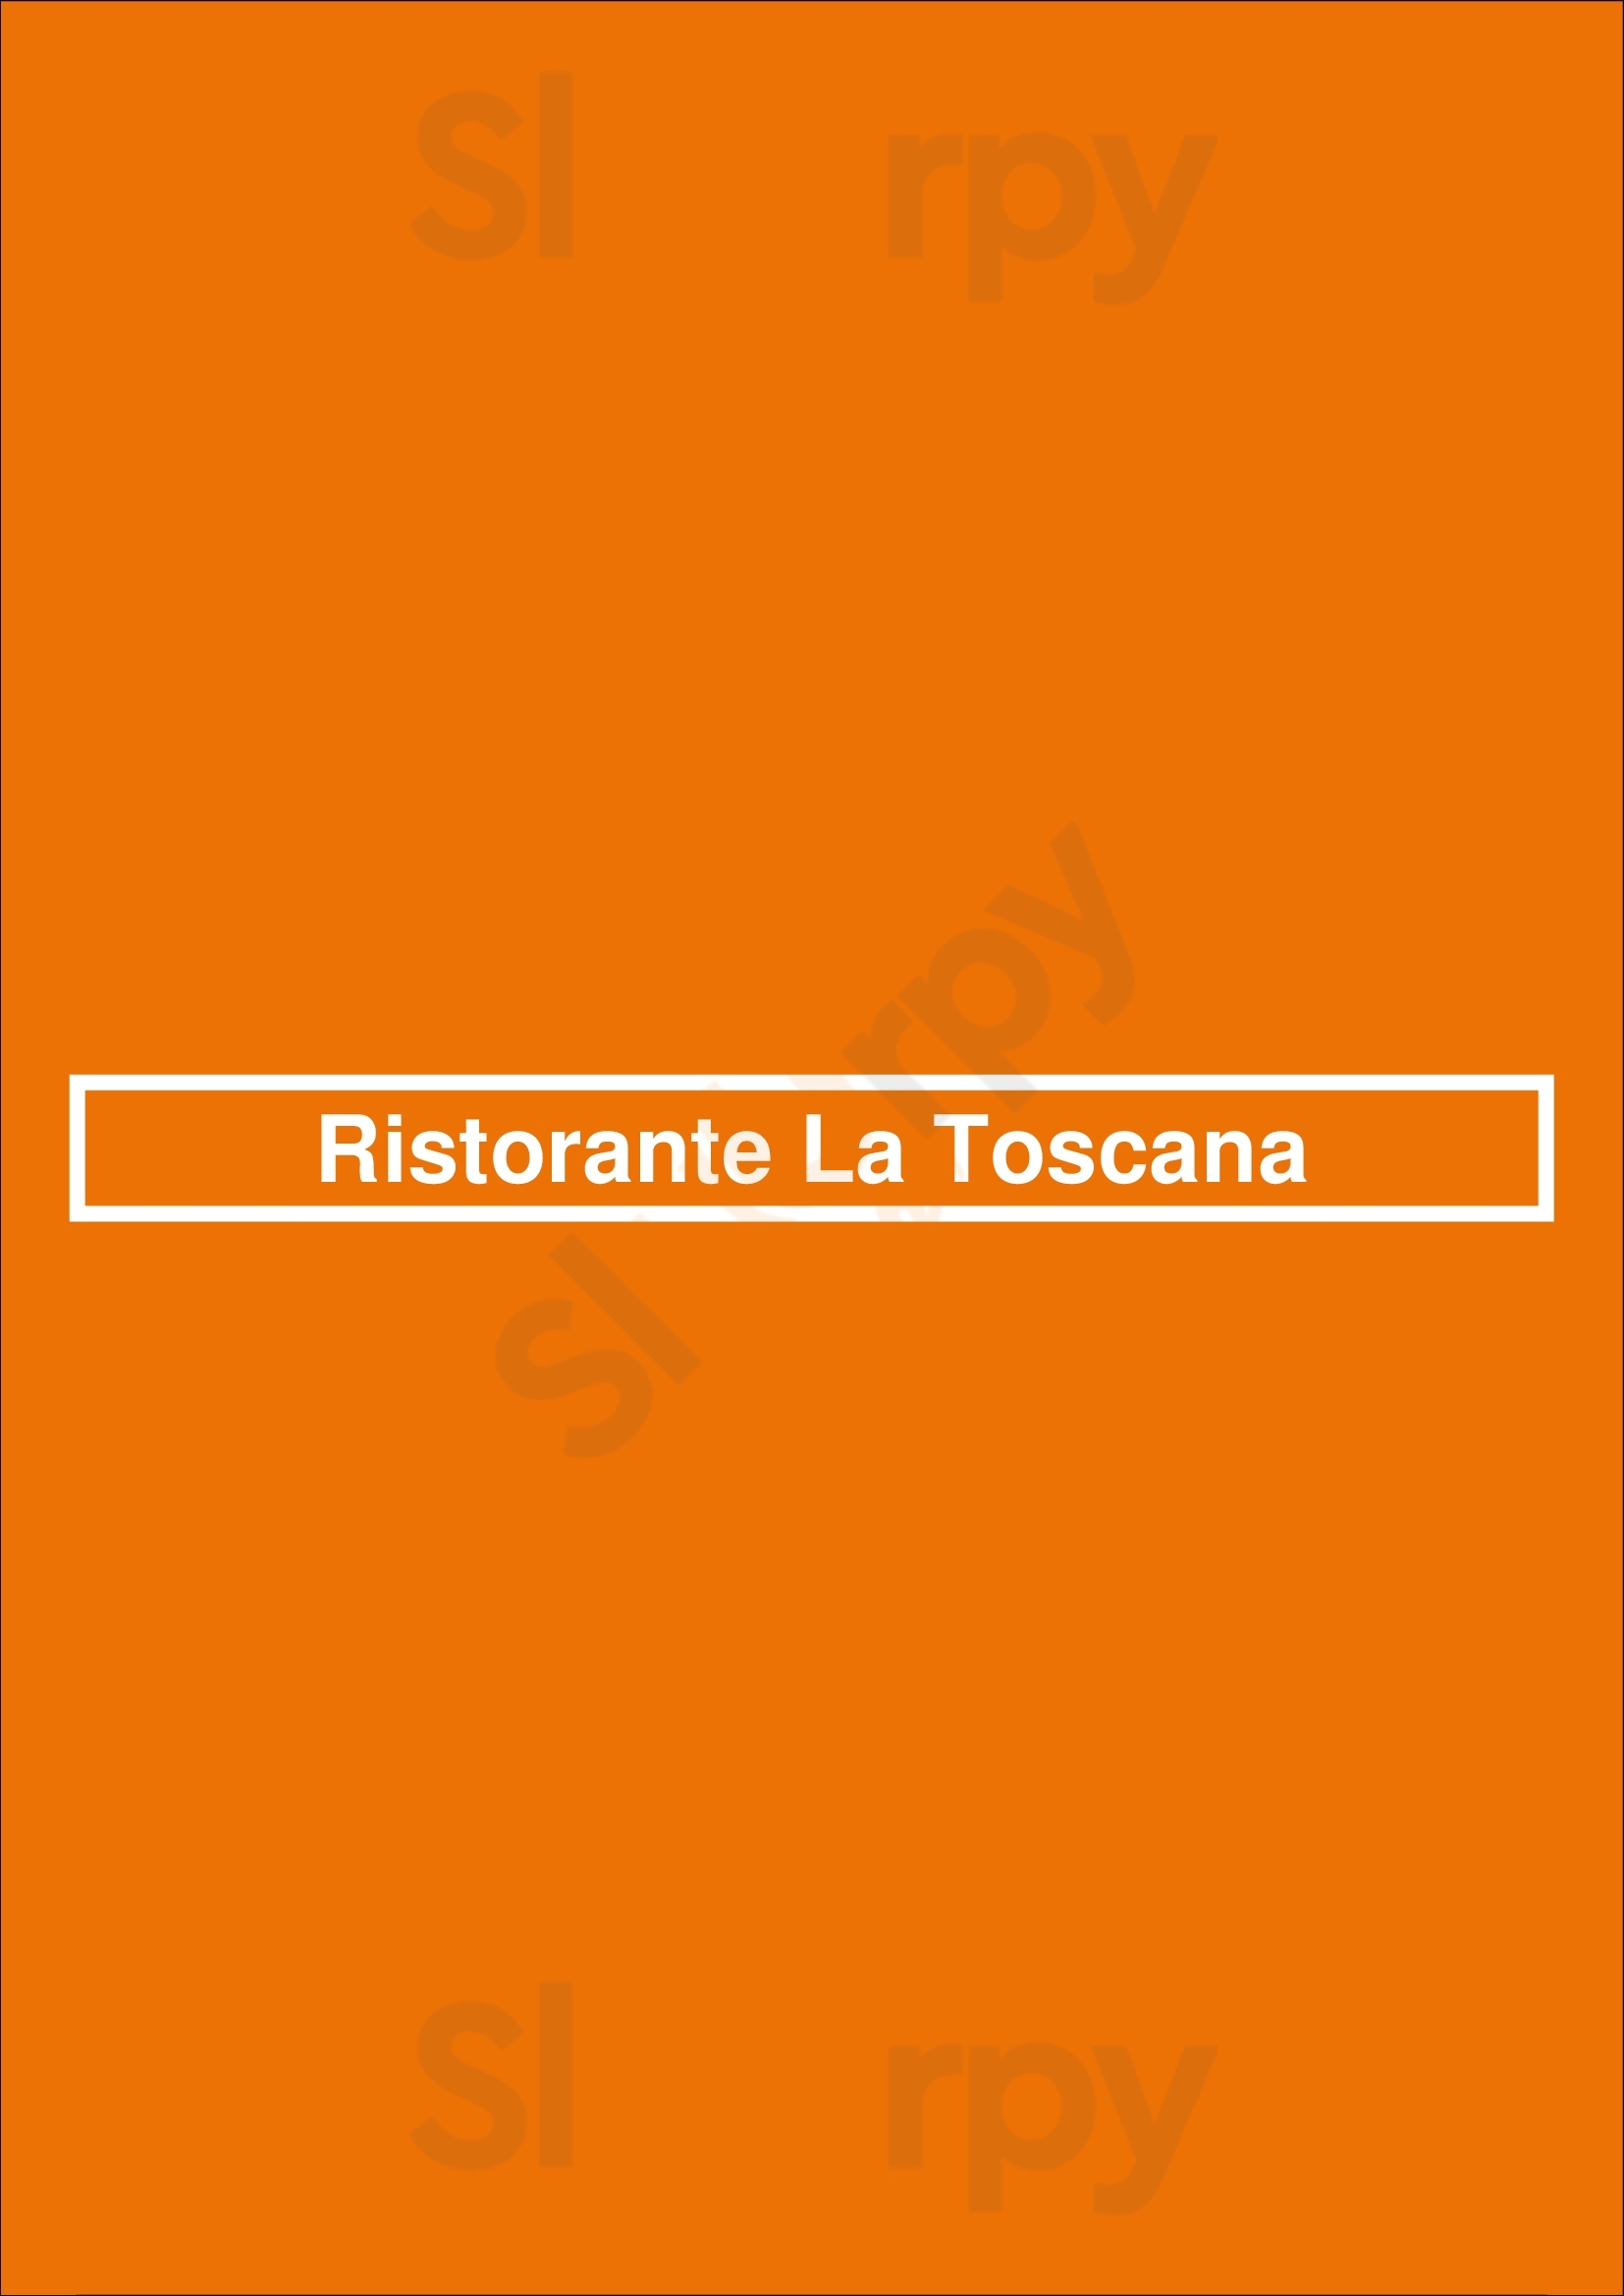 Ristorante La Toscana San Rafael Menu - 1